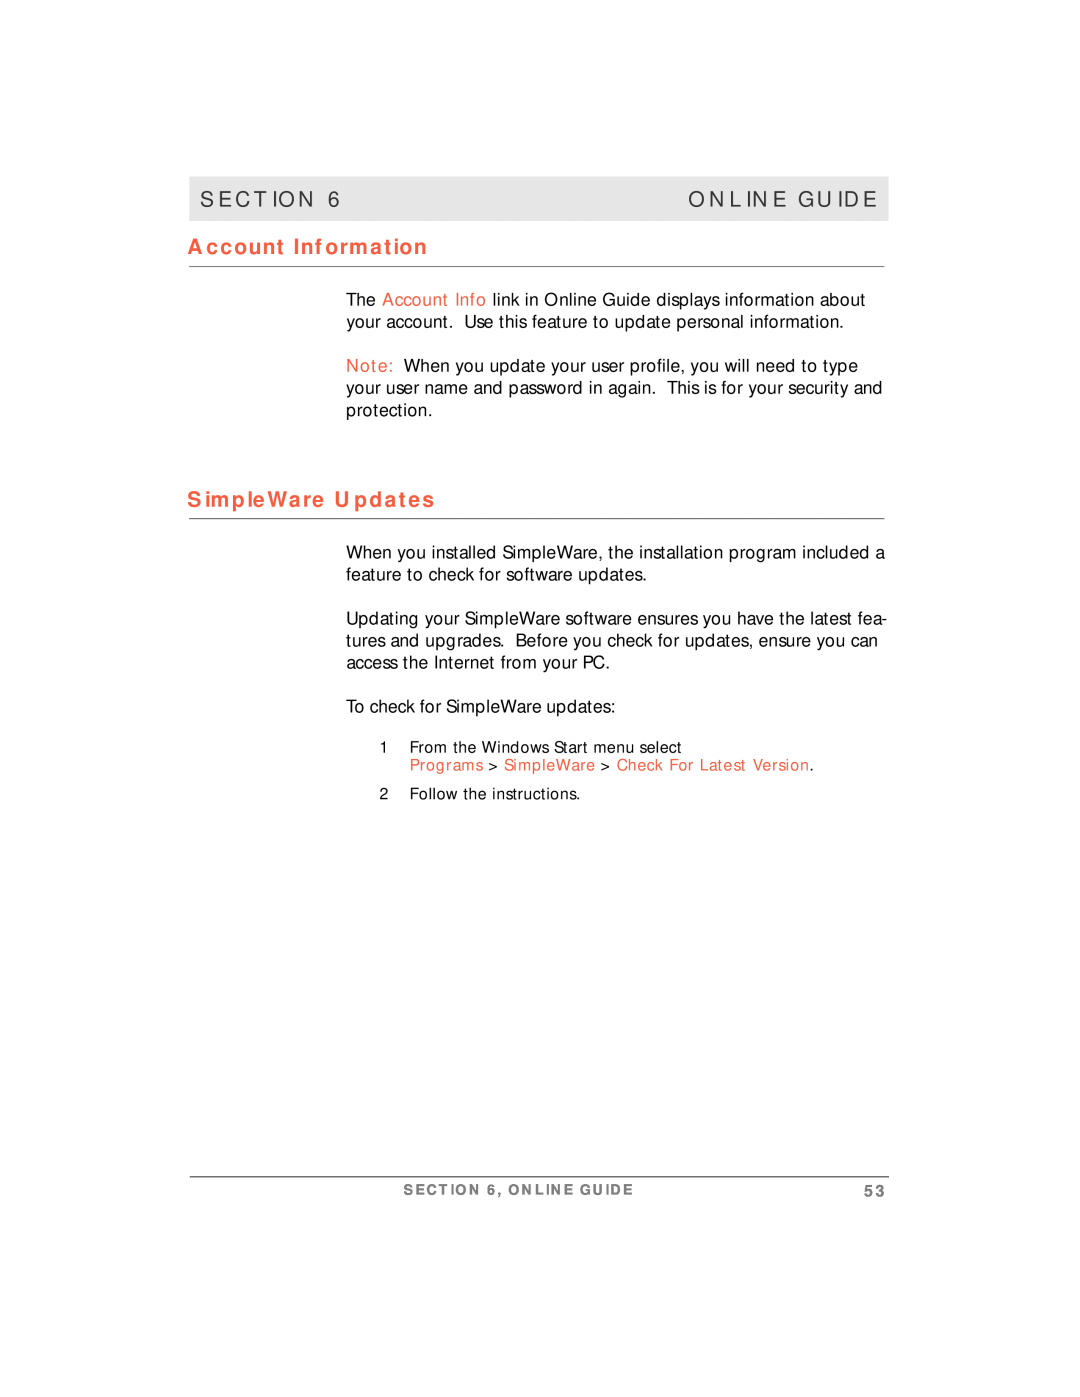 Motorola simplefi manual Account Information, SimpleWare Updates, Section, Online Guide 